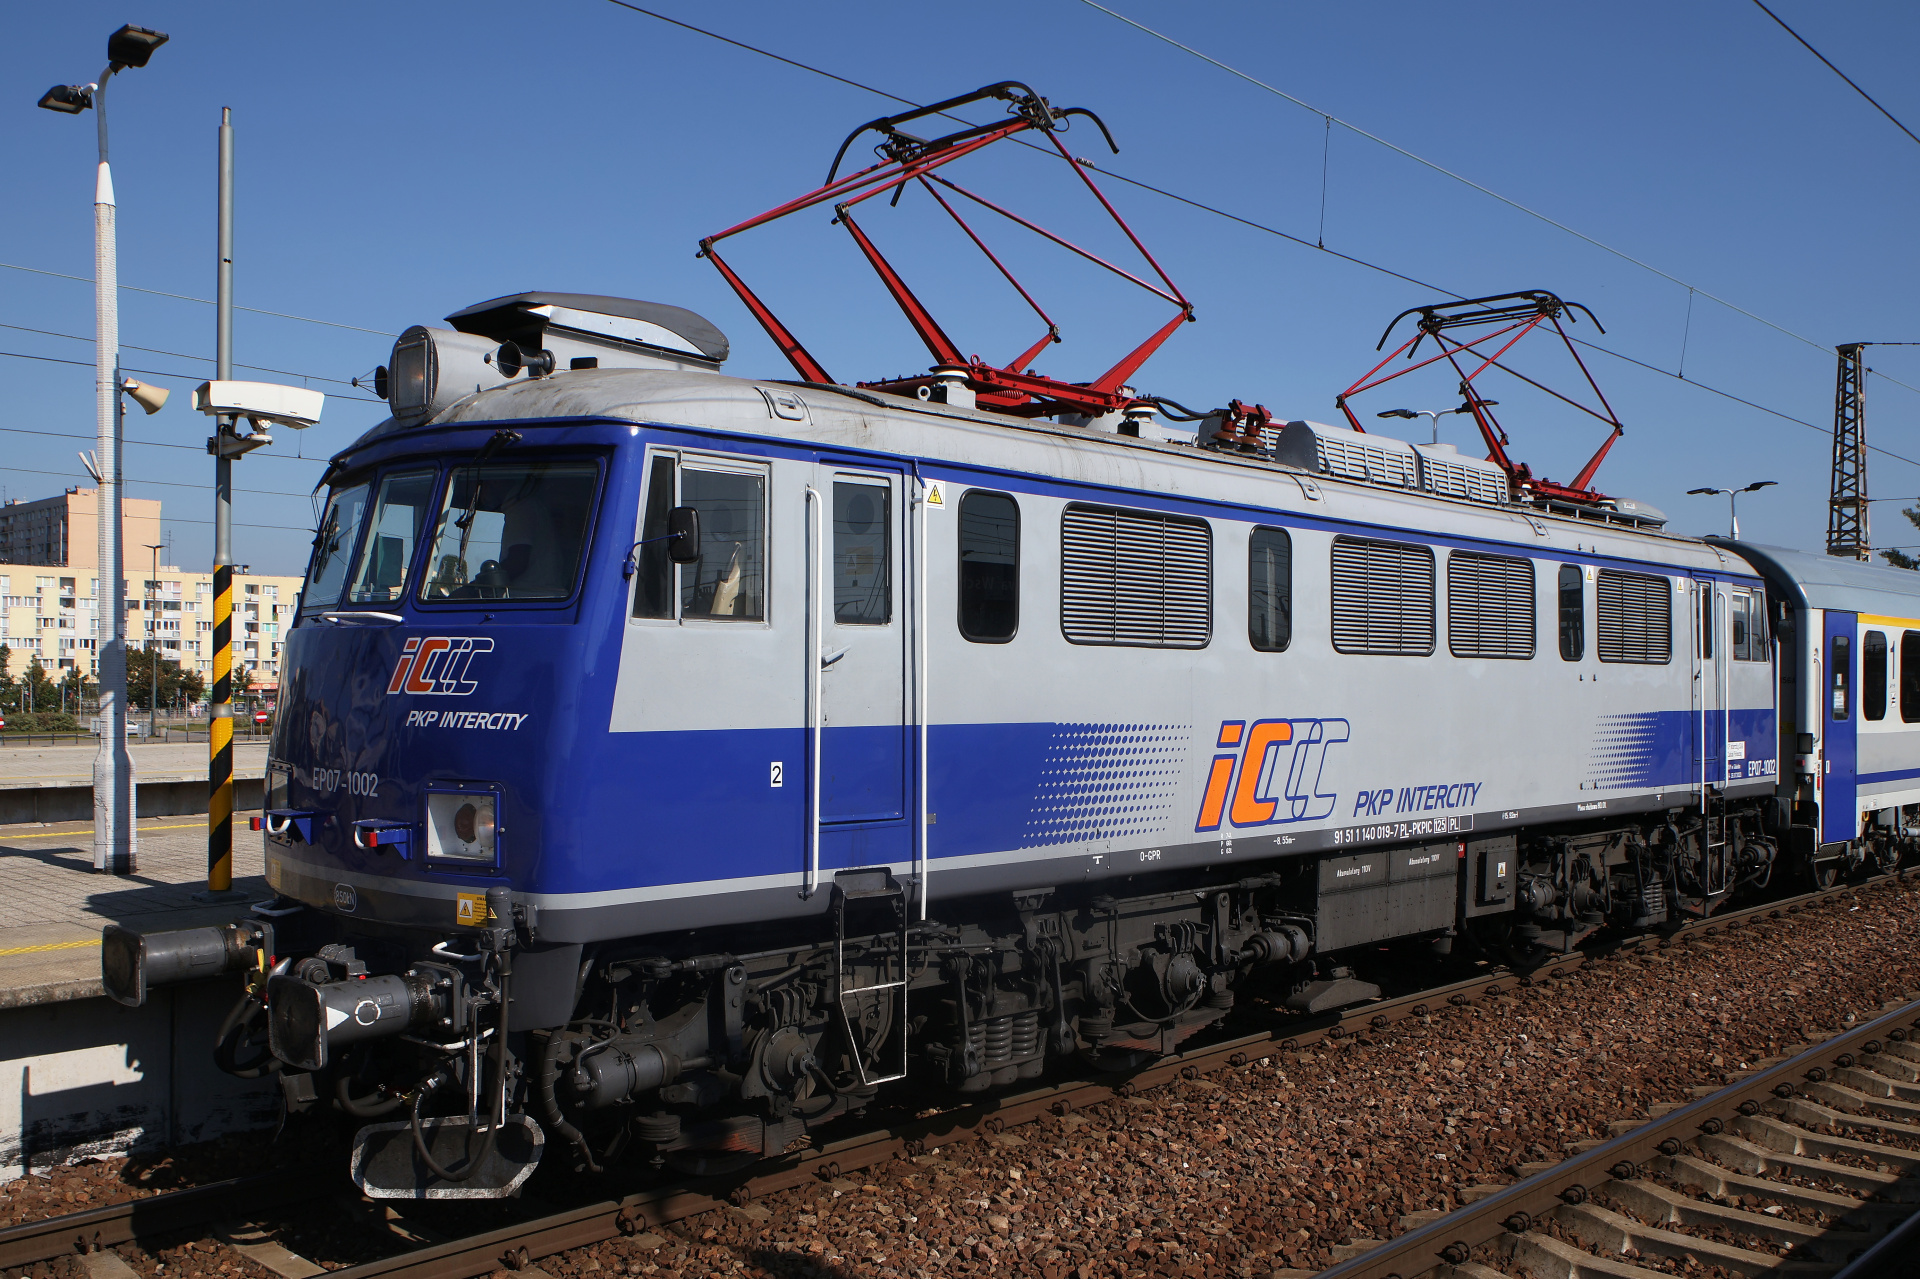 EP07-1002 (Vehicles » Trains and Locomotives » Pafawag 4E)